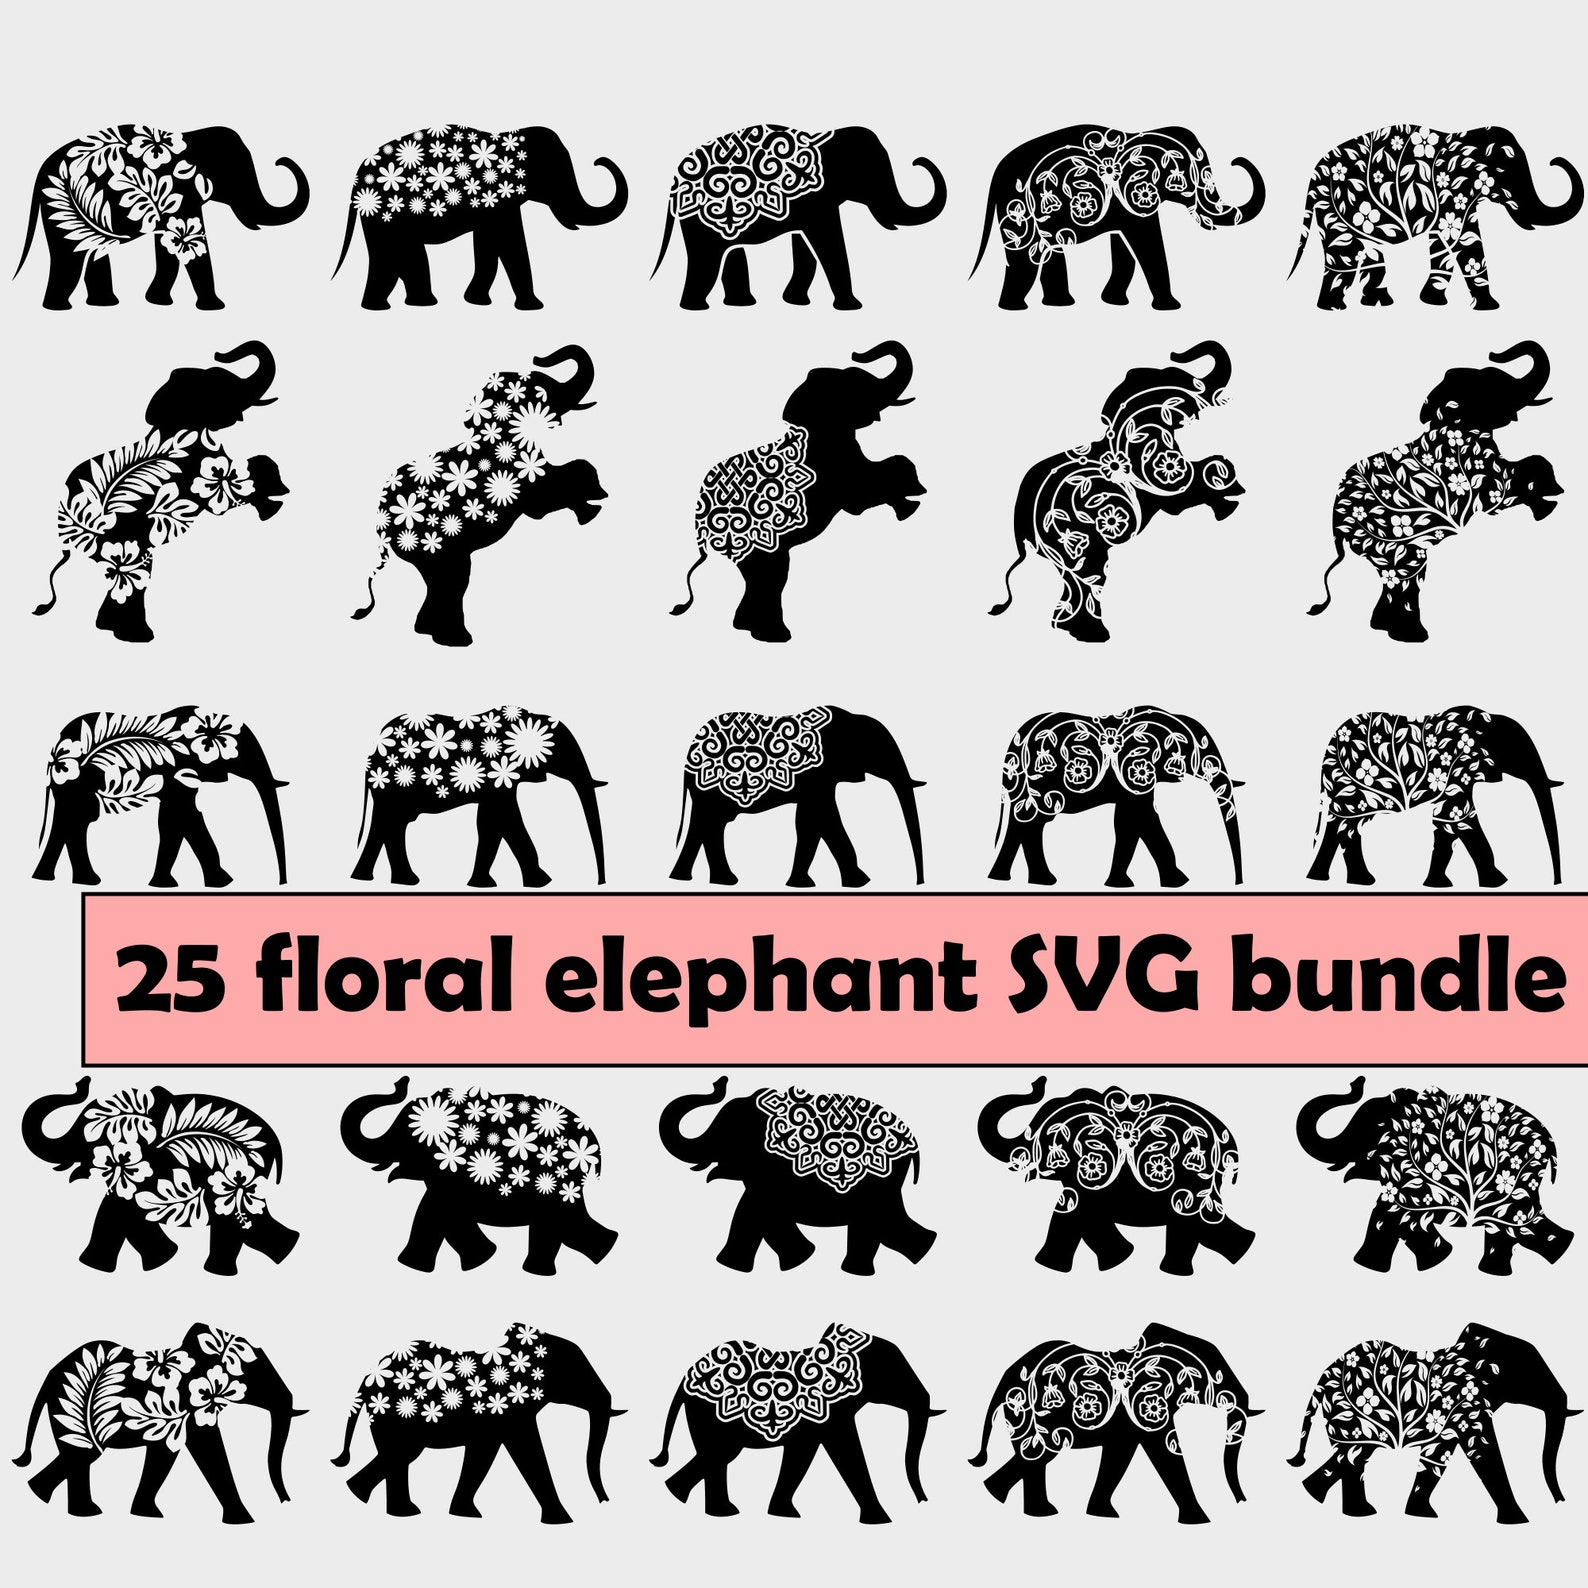 This bundle includes 25 floral elephants pictures.